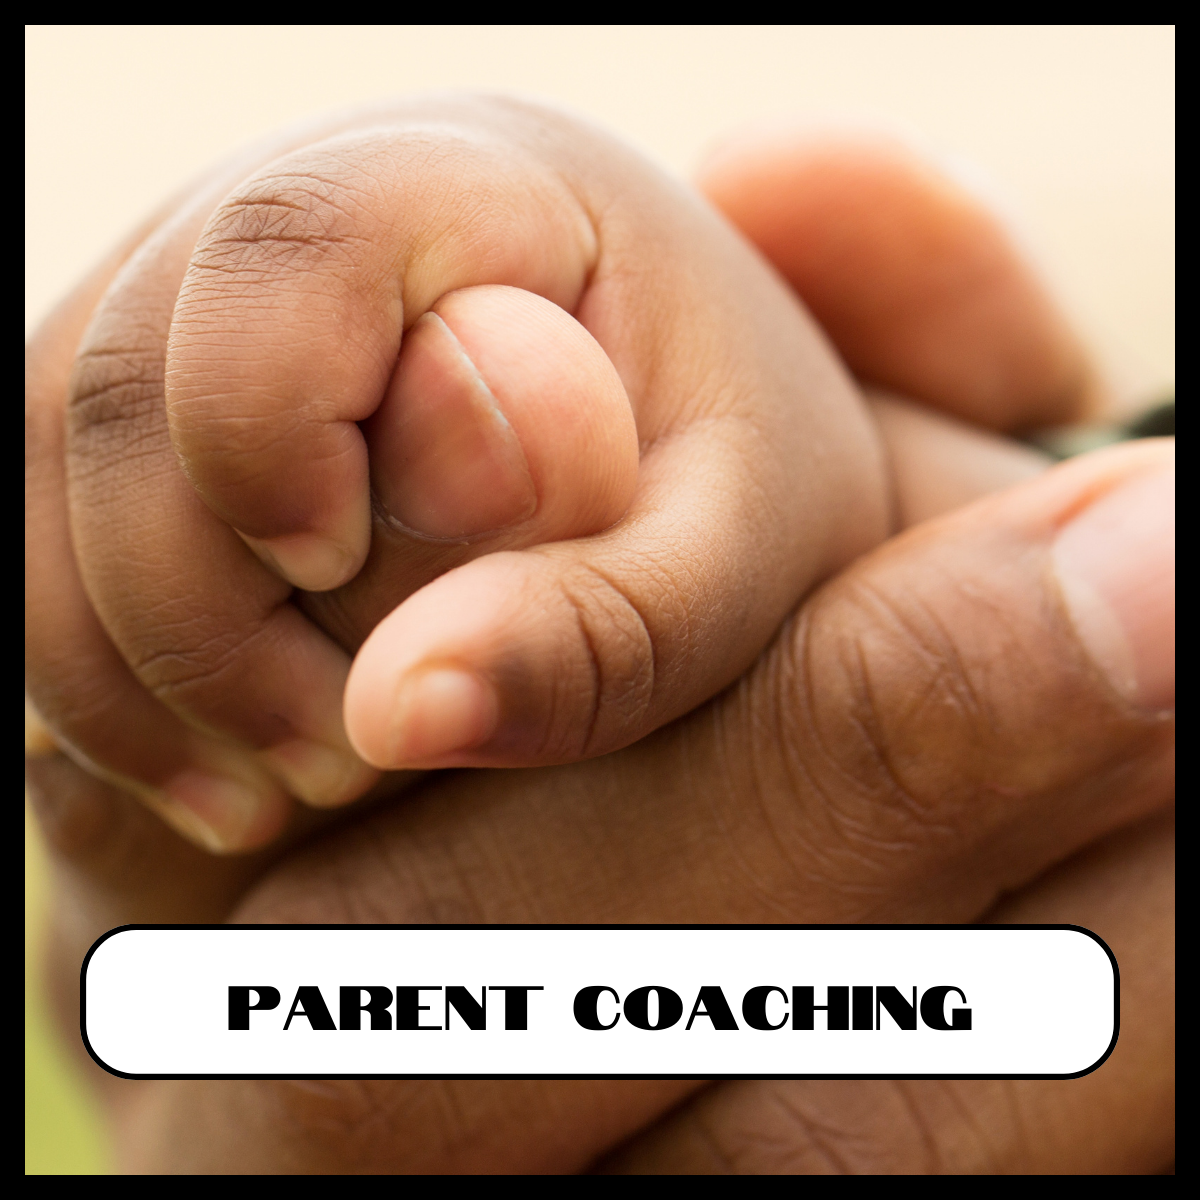 Parent Coaching Resources